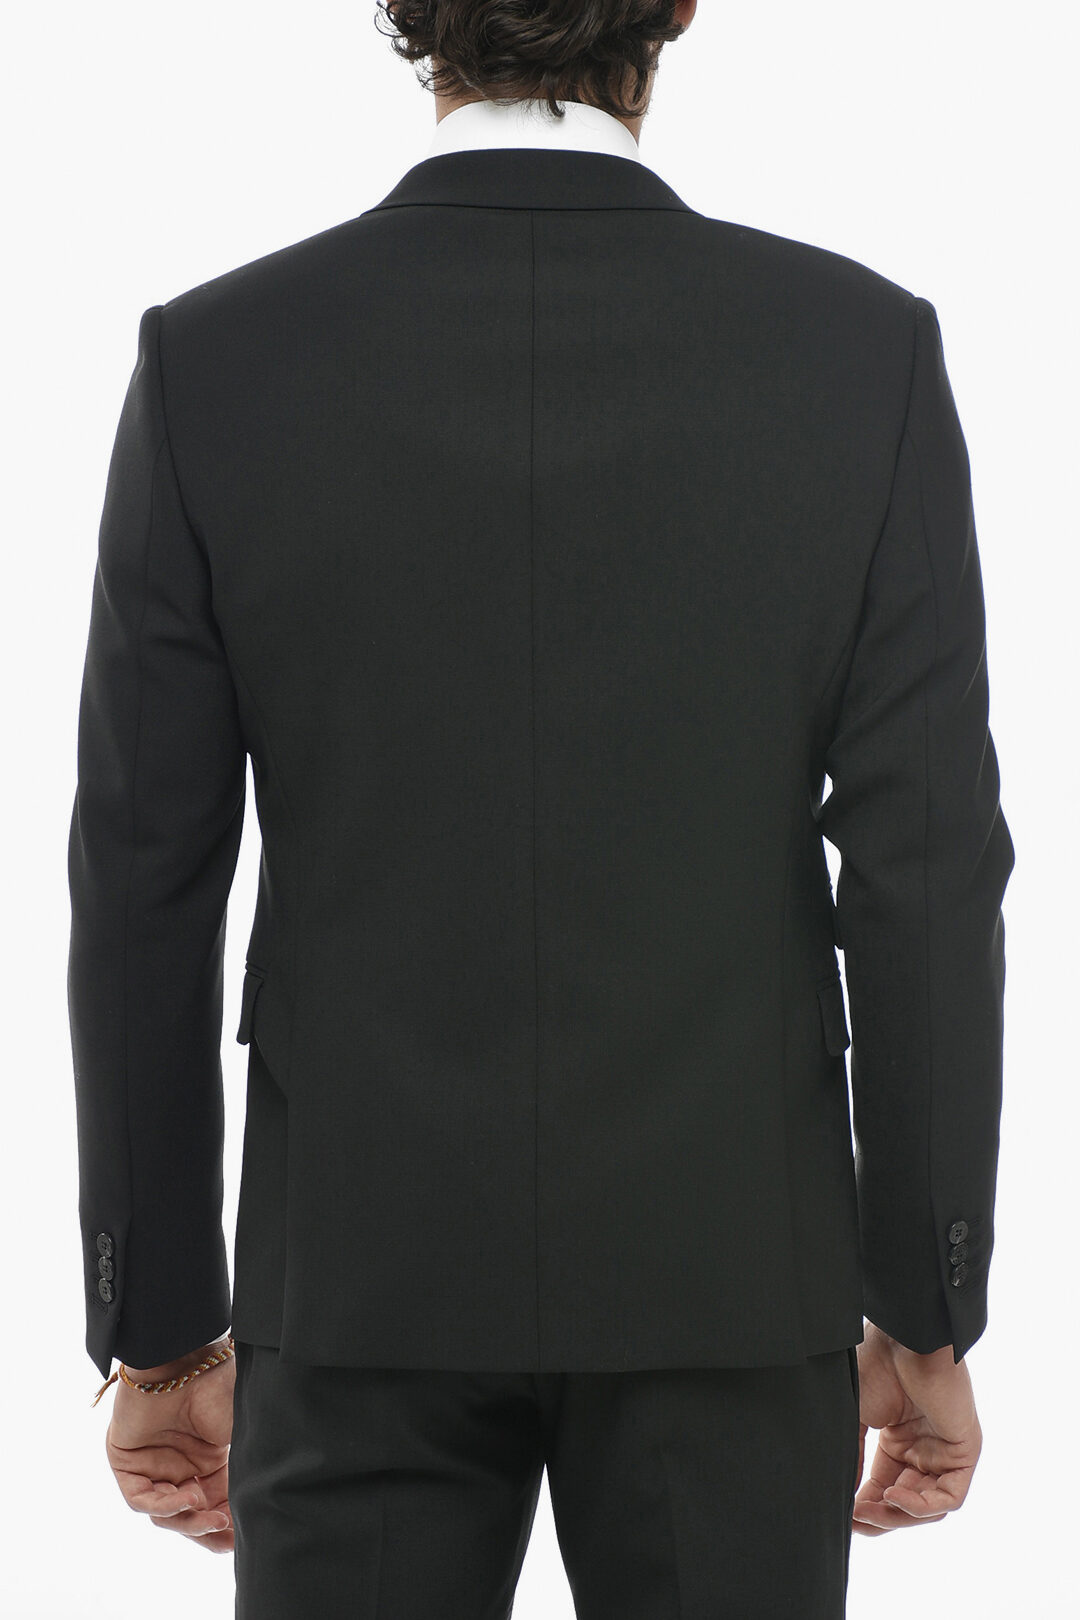 Neil Barrett Notch Lapel Wool Blend Slim Fit Suit men - Glamood Outlet